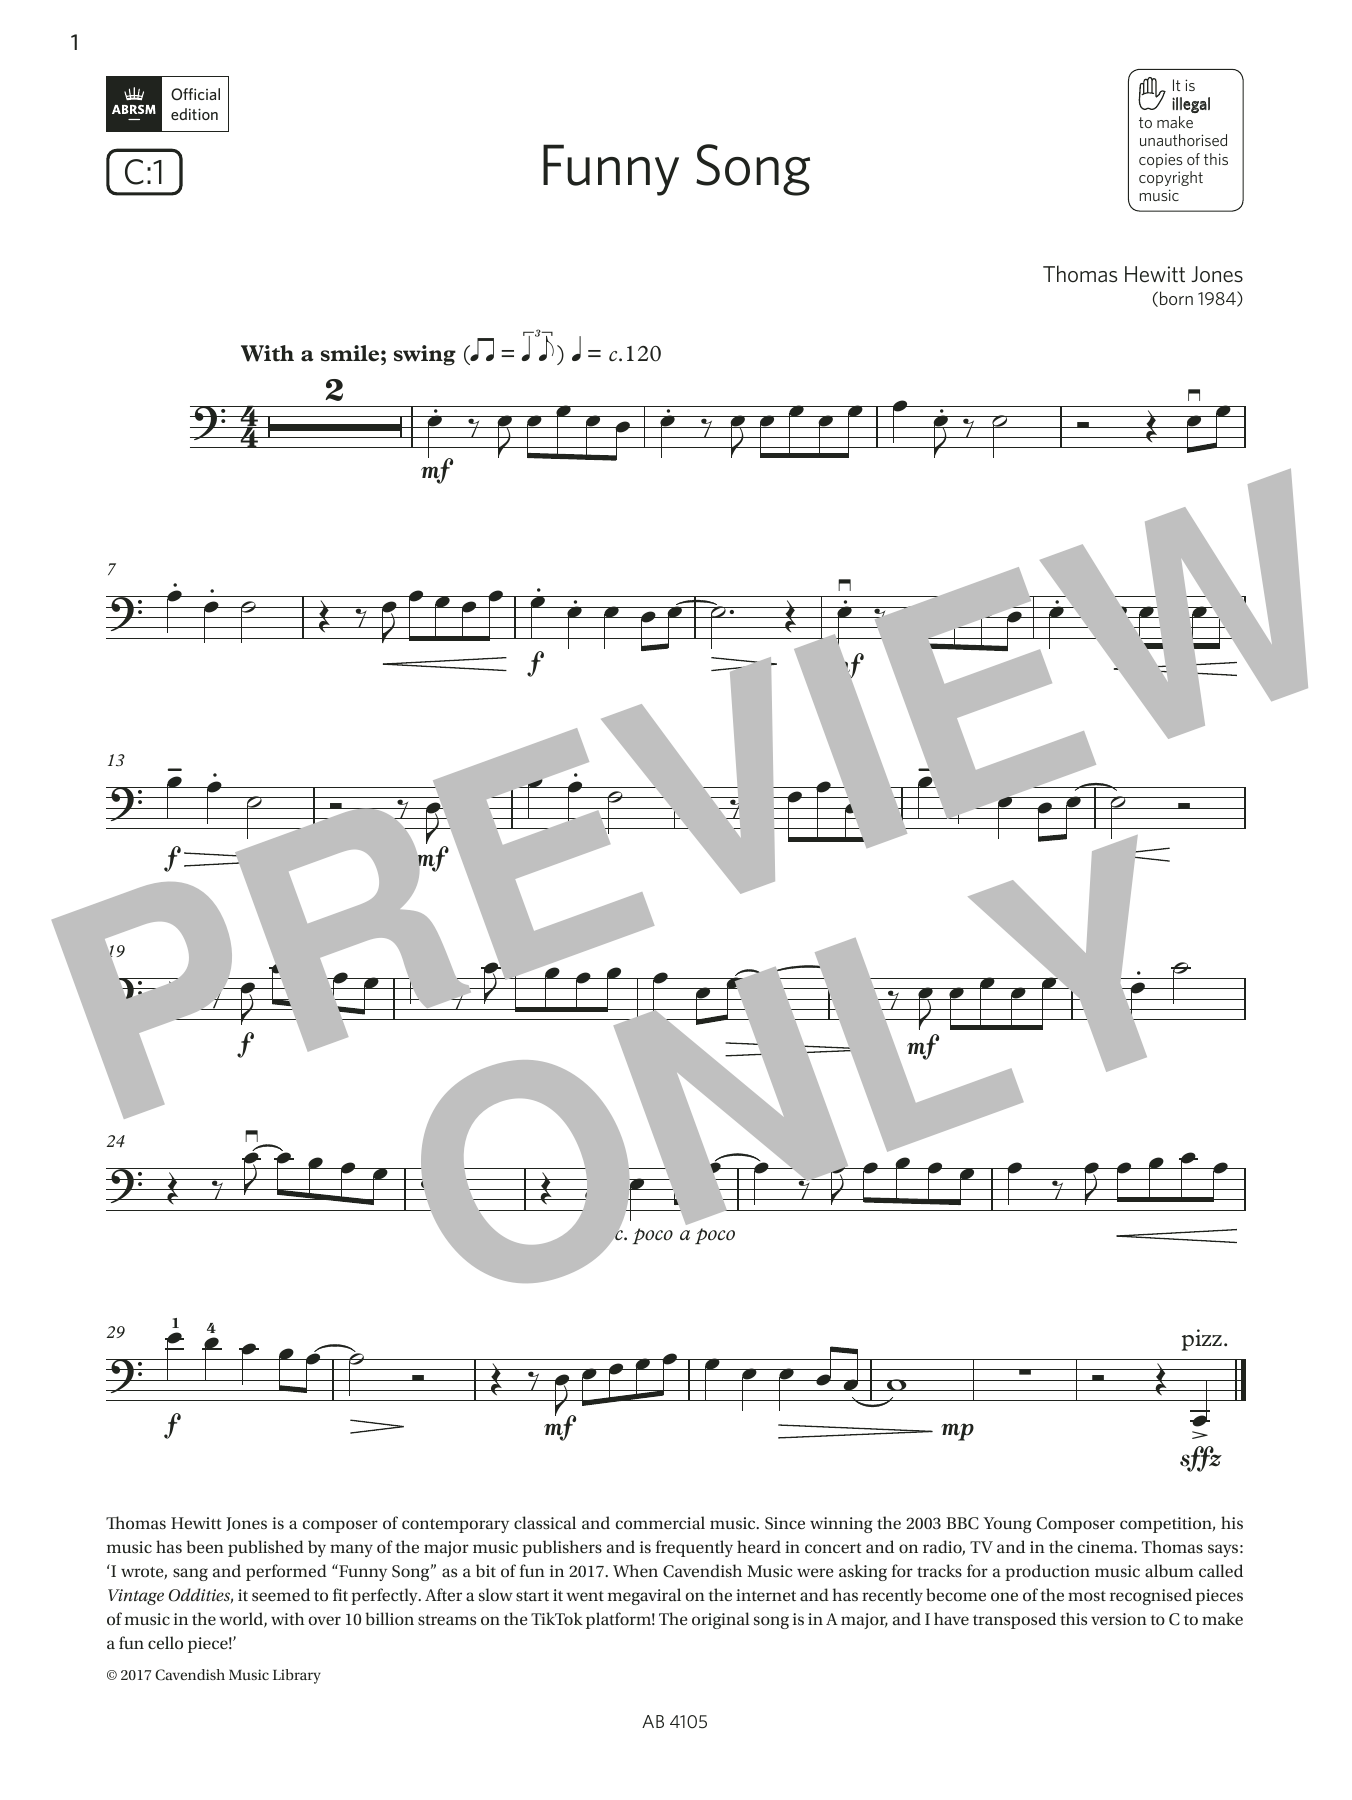 Download Thomas Hewitt Jones Funny Song (Grade 2, C1, from the ABRSM Sheet Music